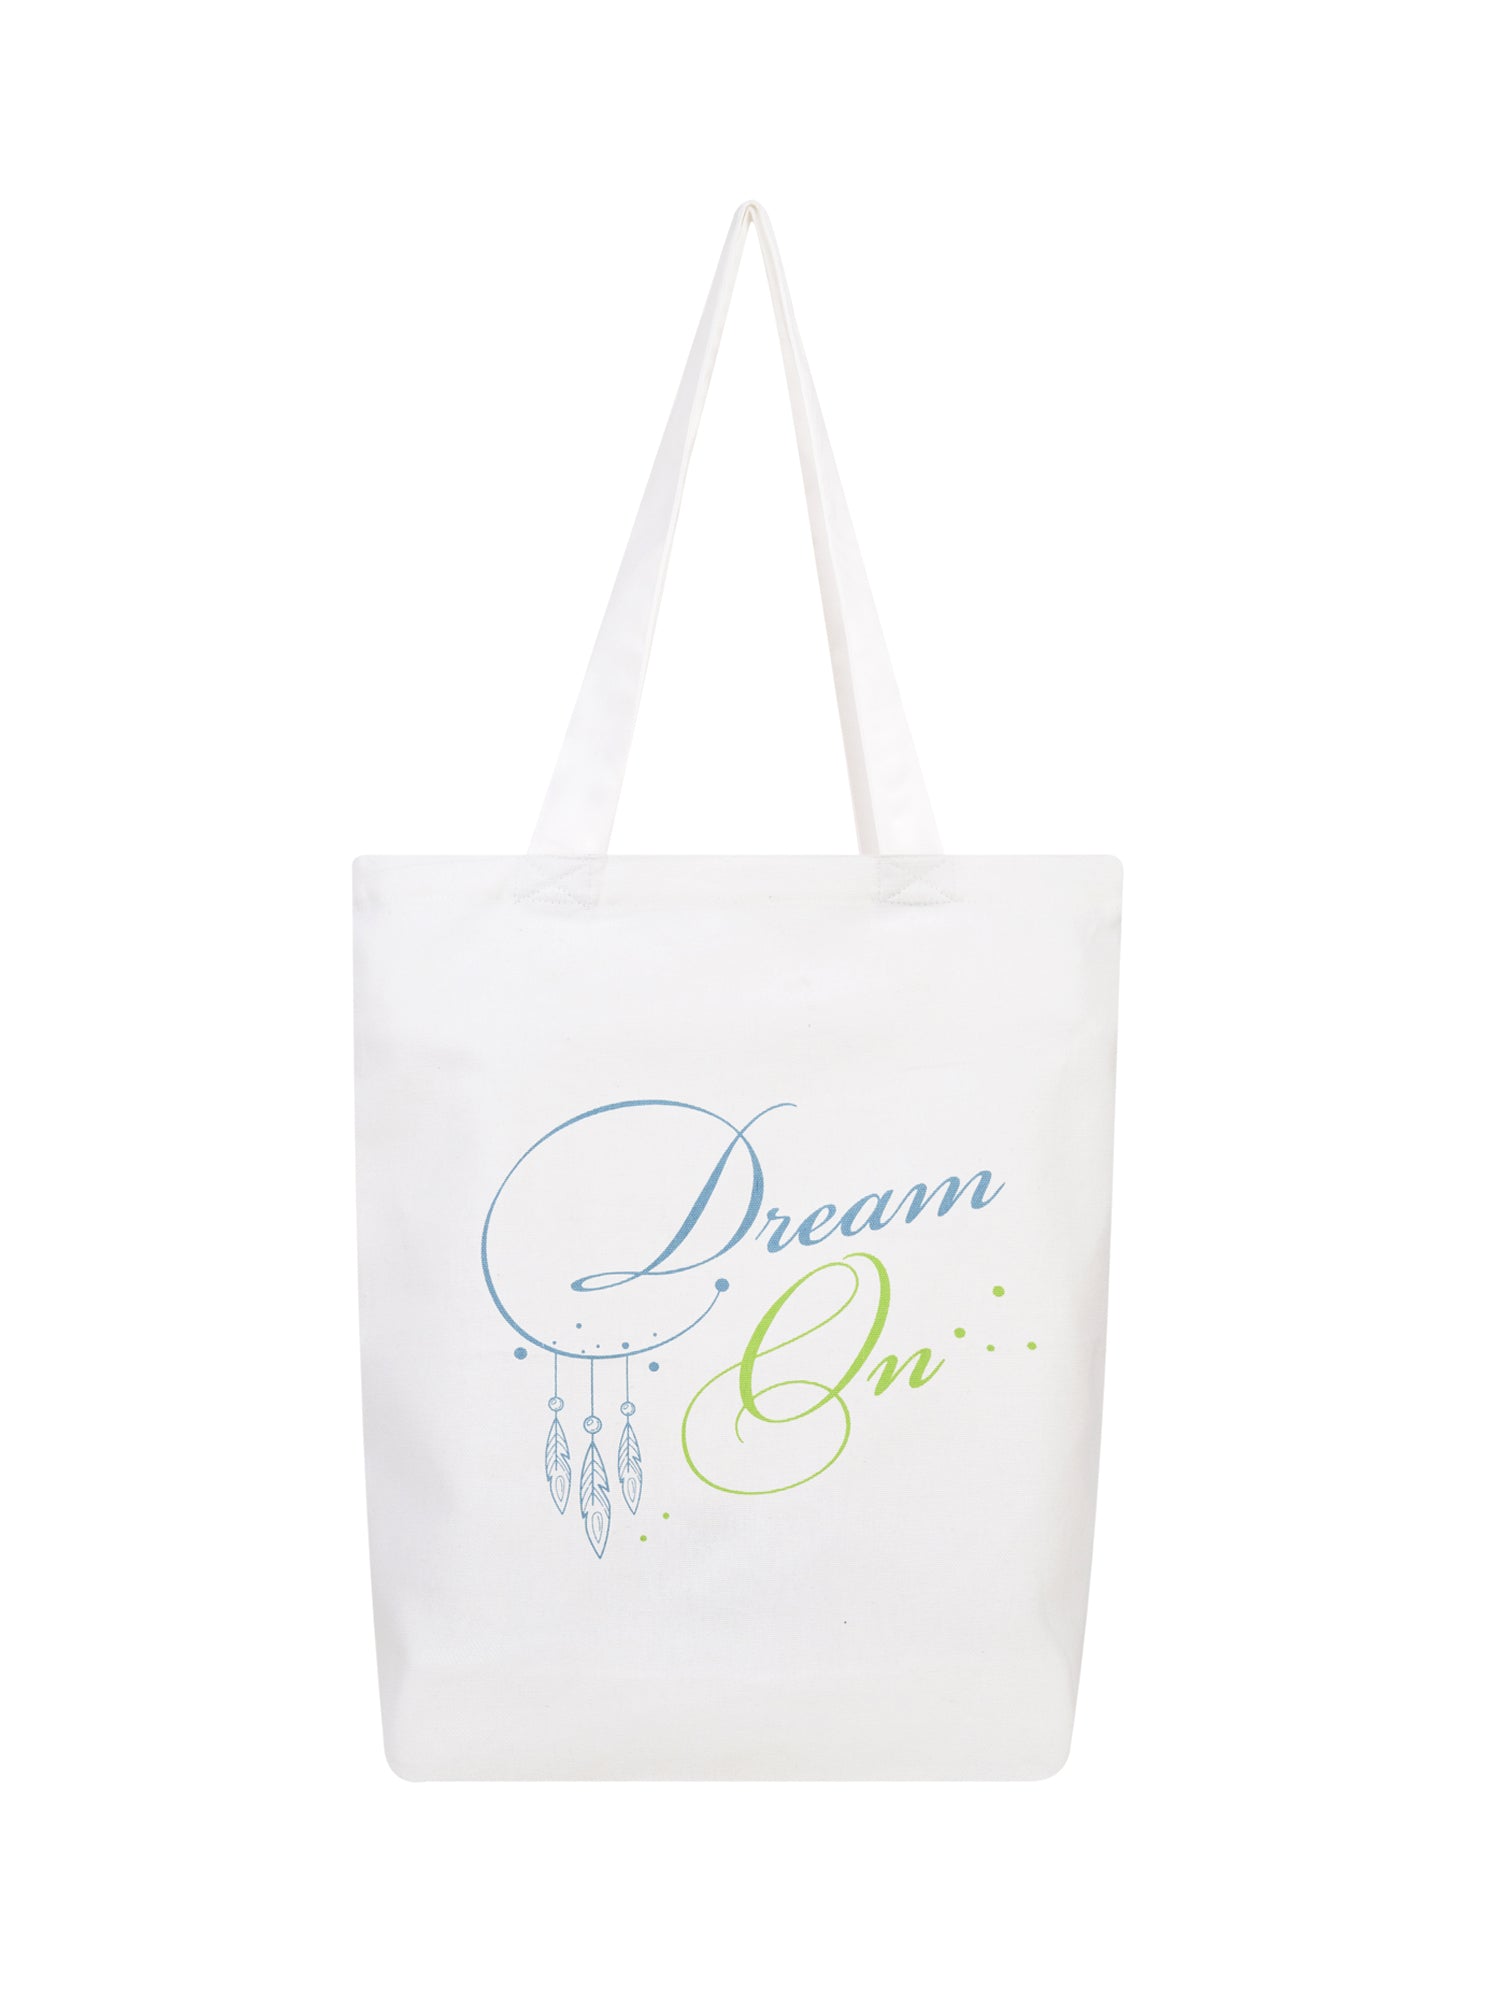 Dreamer - Tote Bag